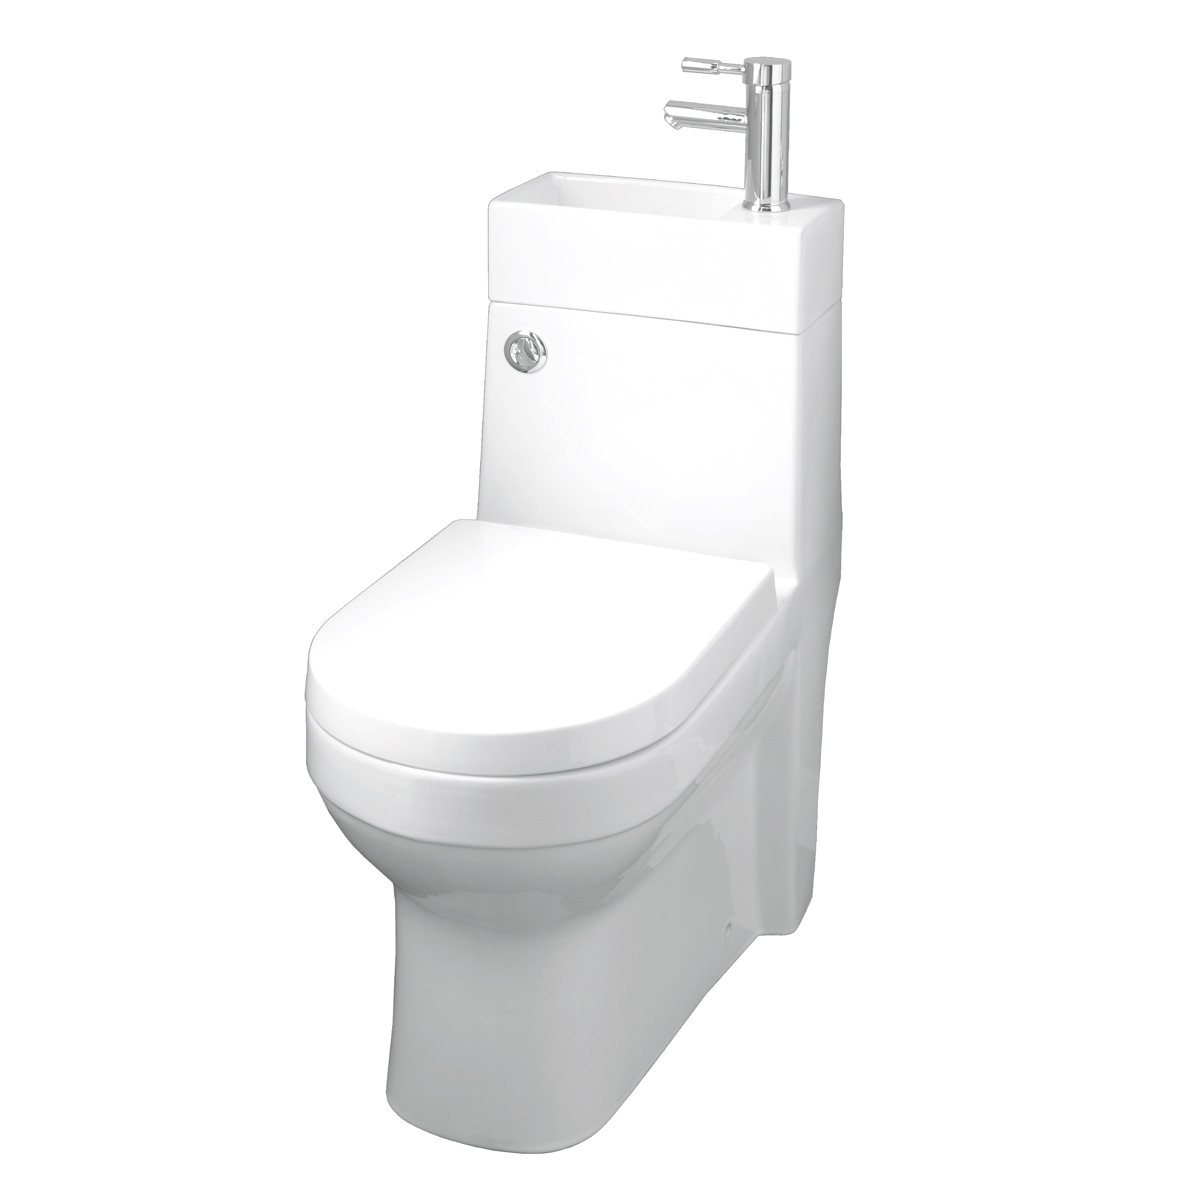 Toilet Sink Combo Units for Sale Ireland | AdinaPorter